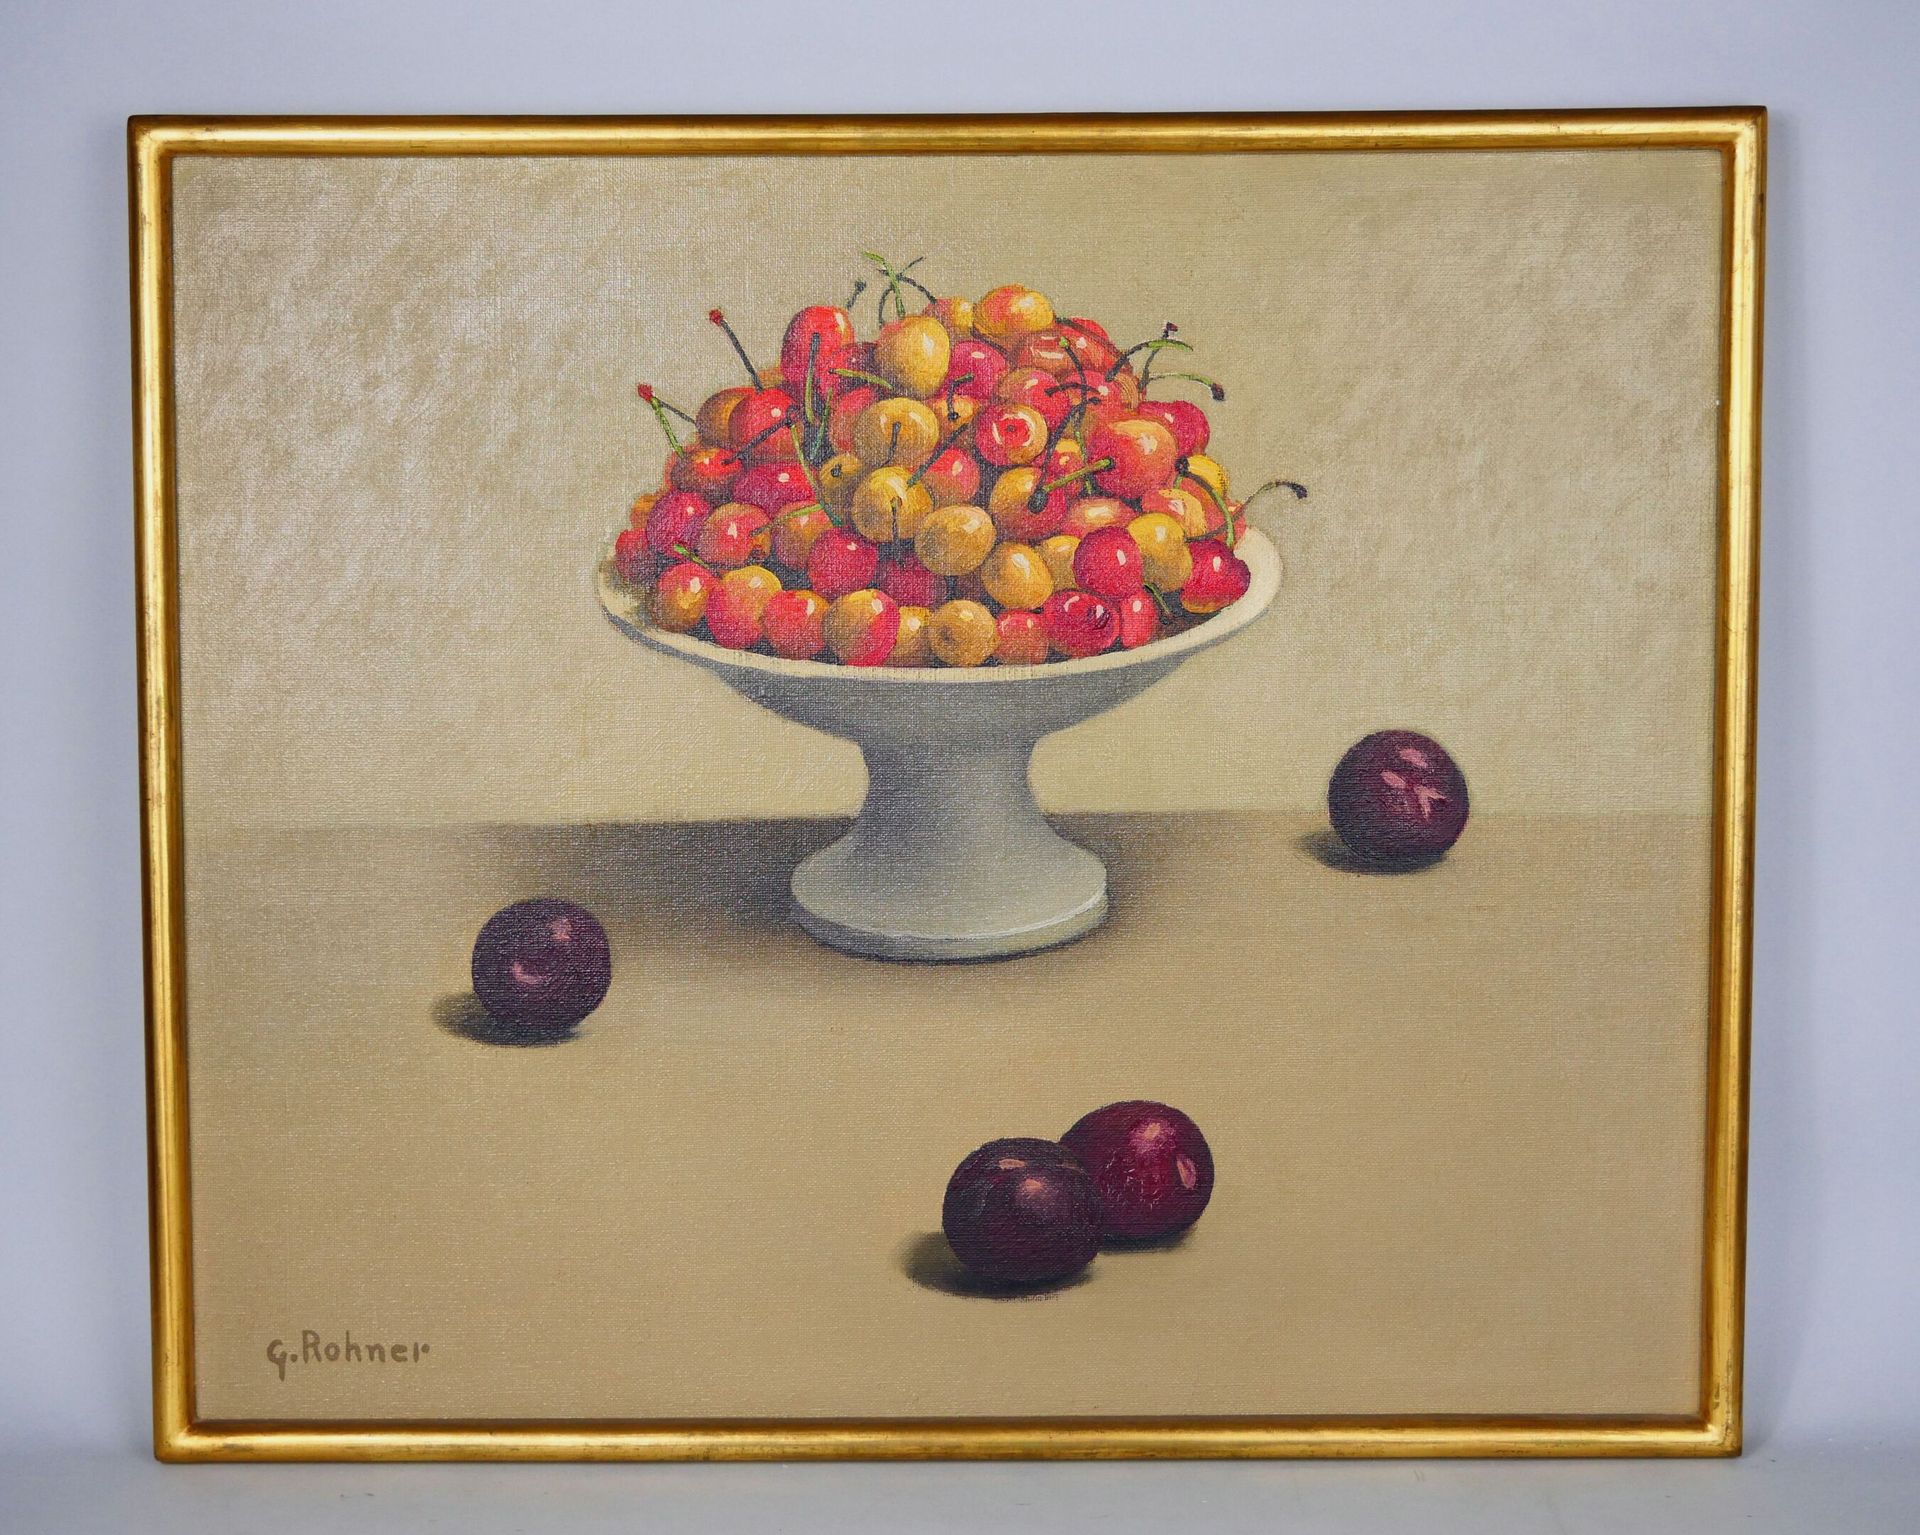 Null 乔治-罗纳 (1913-2000)
静物画与一碗樱桃和李子
布面油画，左下角有签名
尺寸：56 x 68厘米

拍卖会将于2023年4月13日星期四和&hellip;